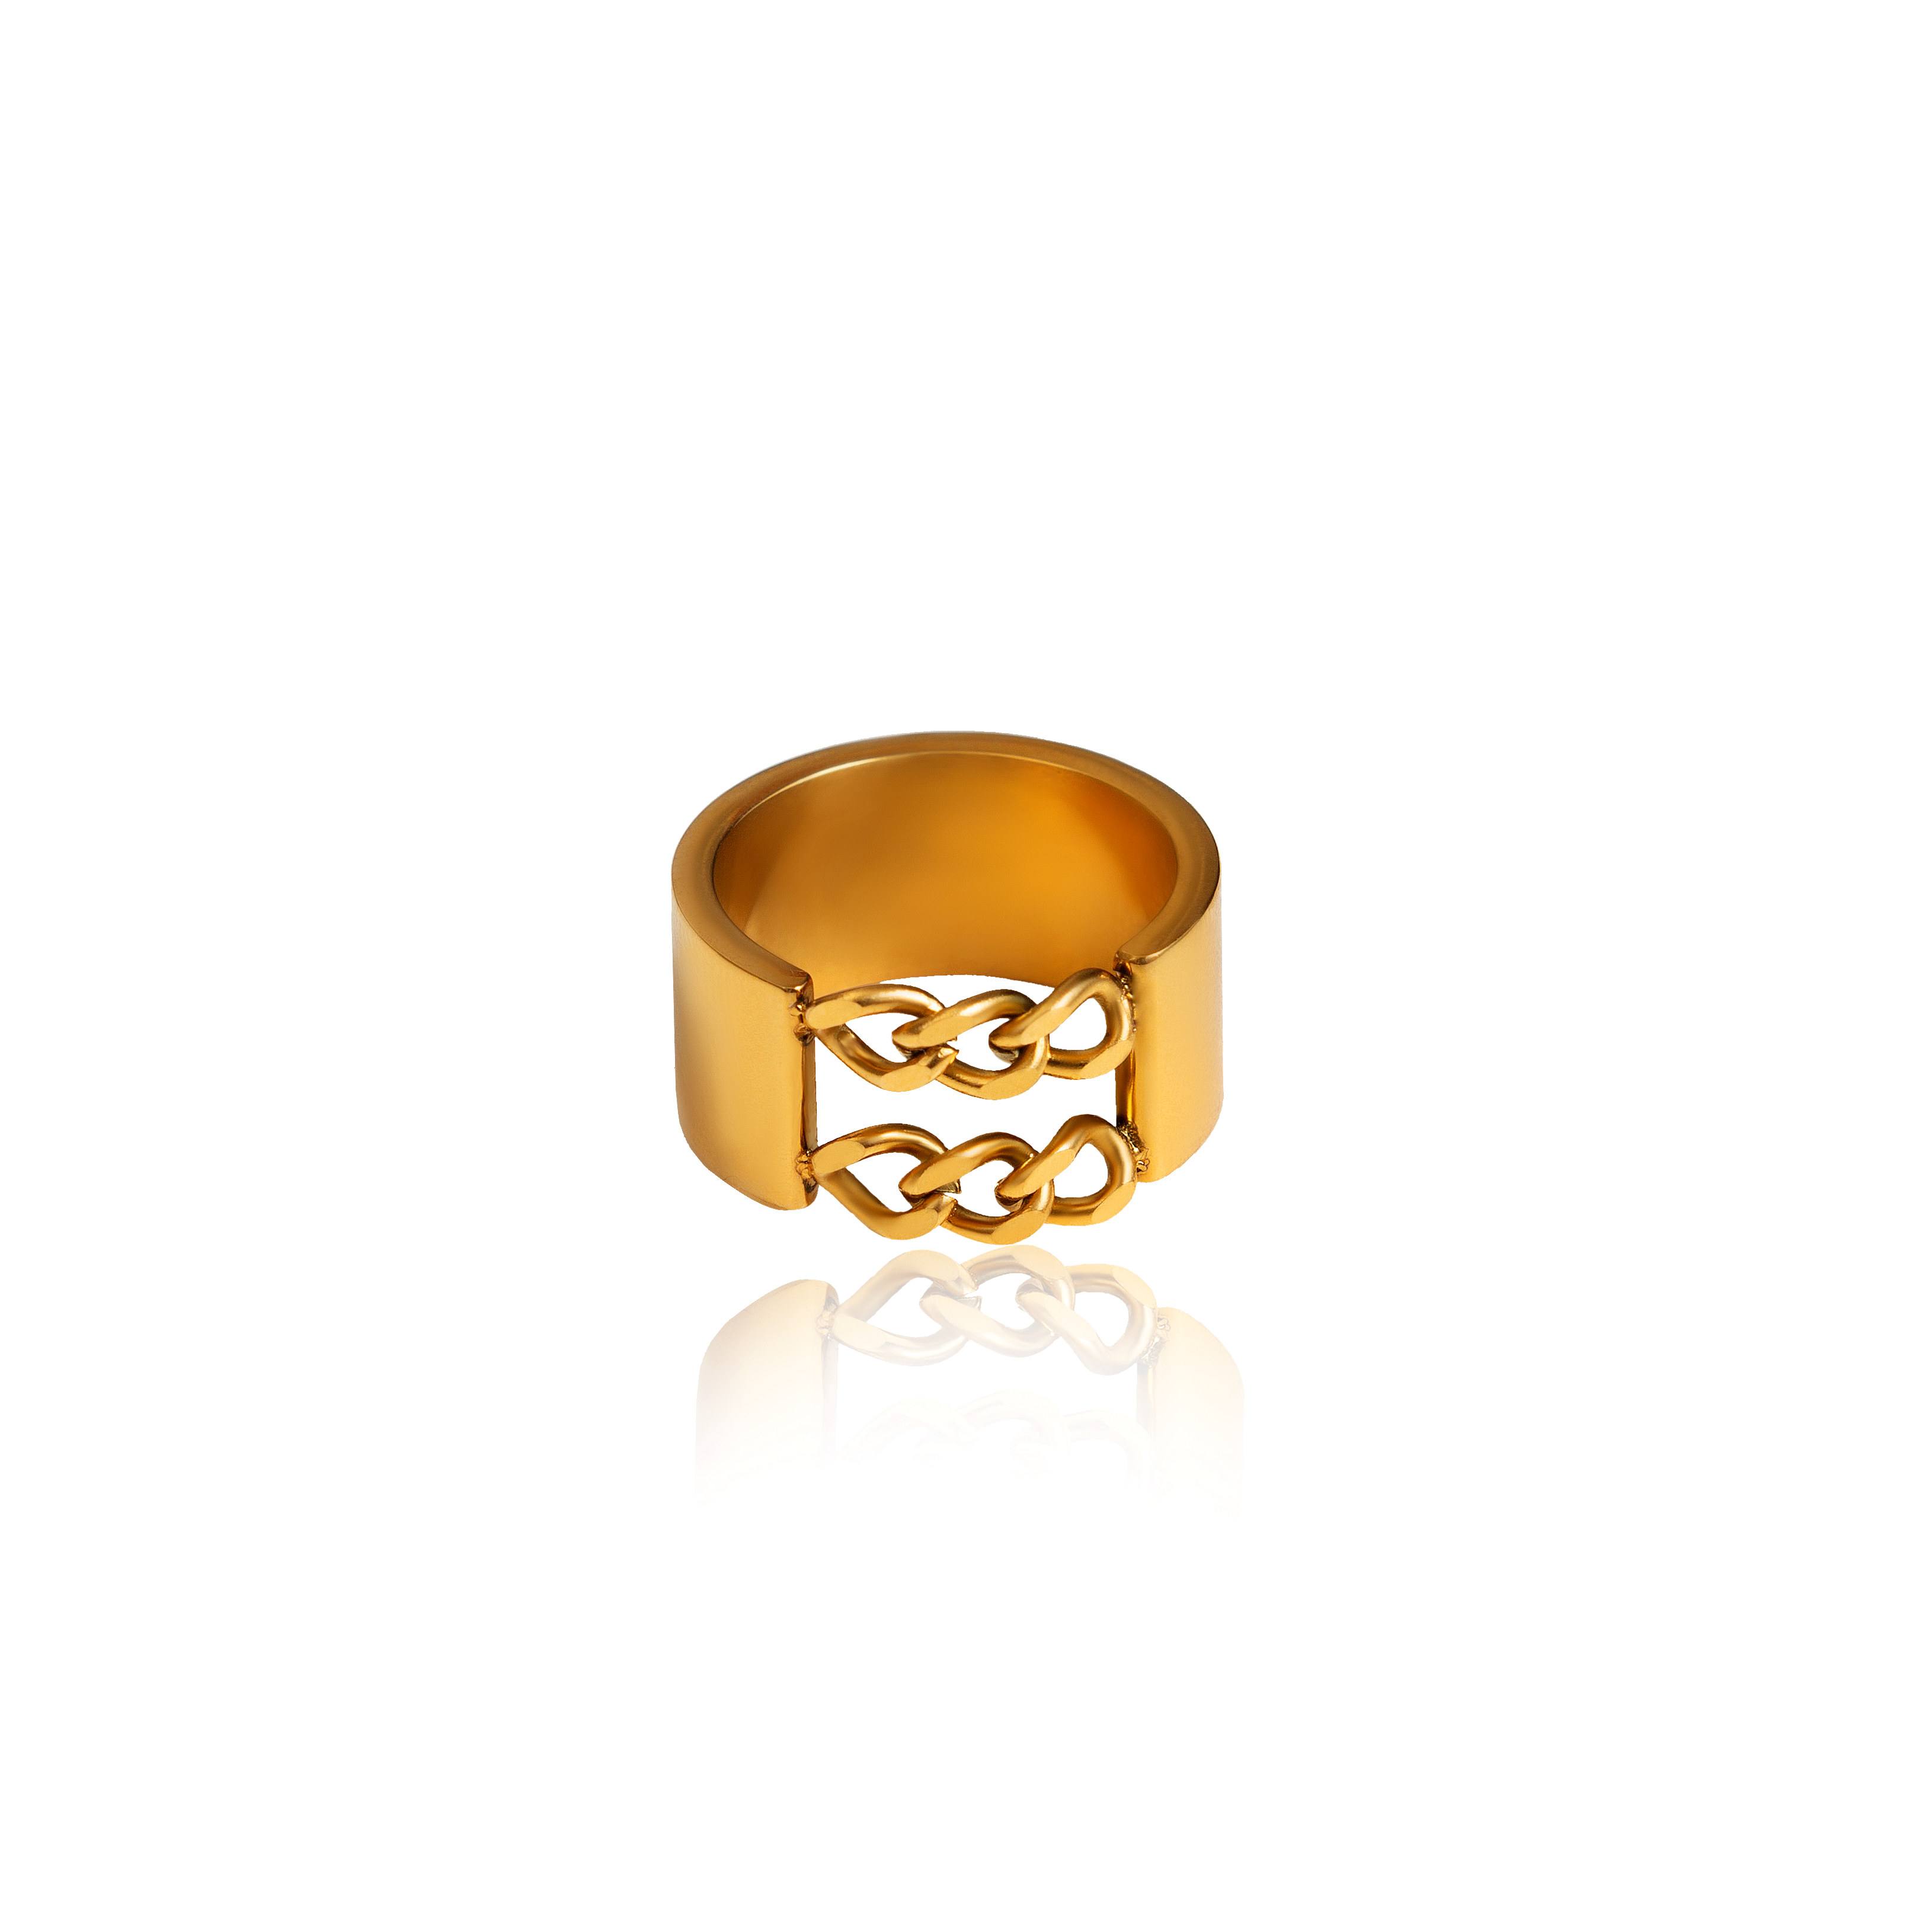 Tseatjewelry Women's Gold Amber Ring